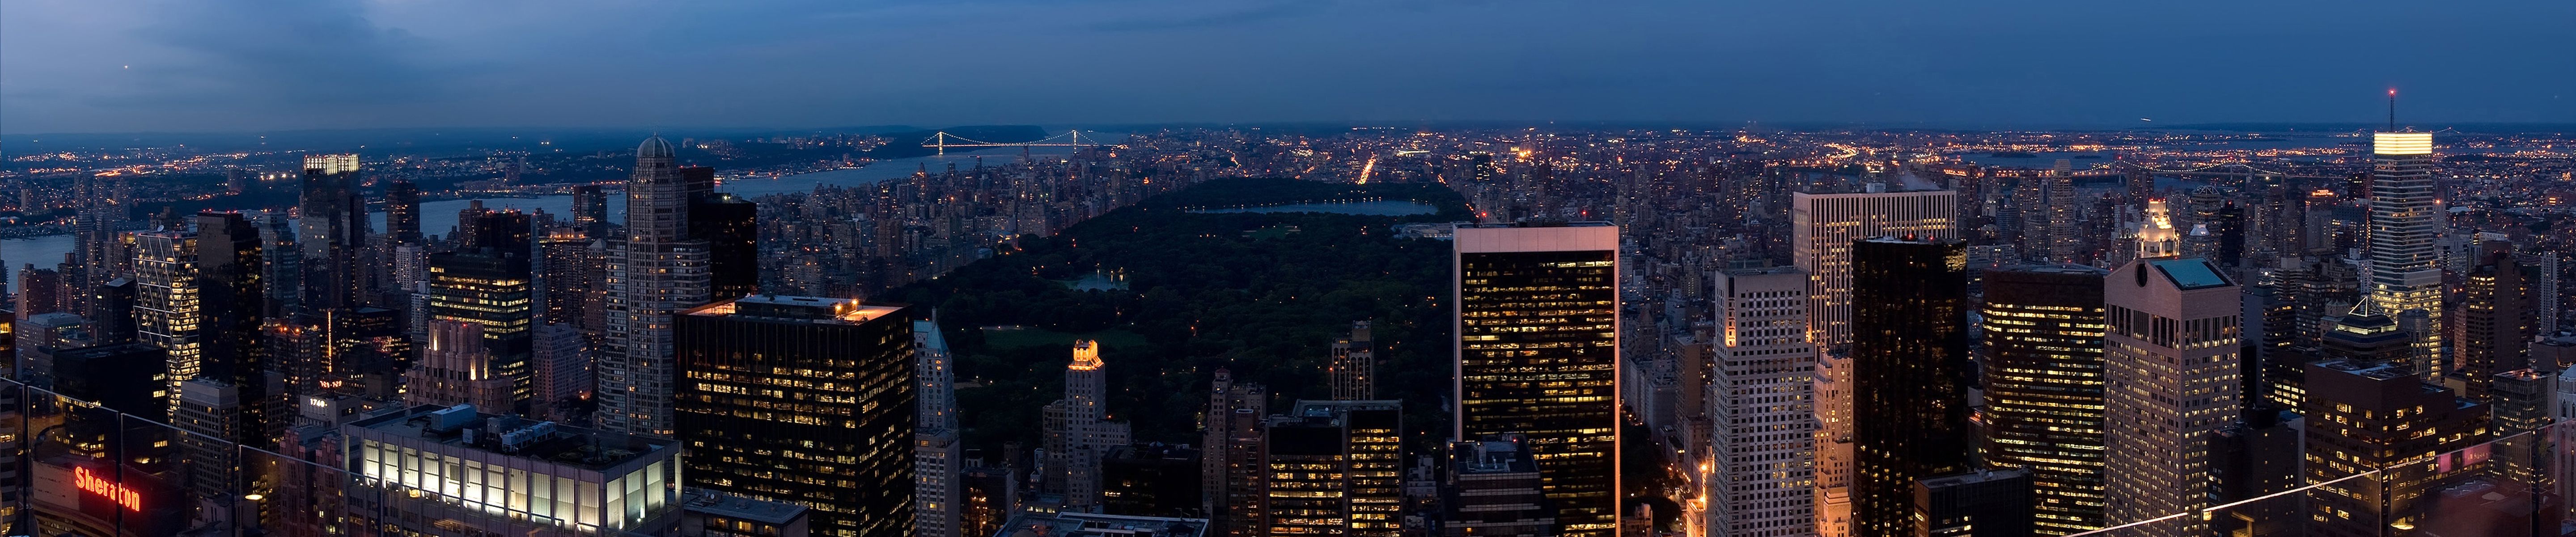 Wallpaper New York City Central Park at night – Triple monitor ...